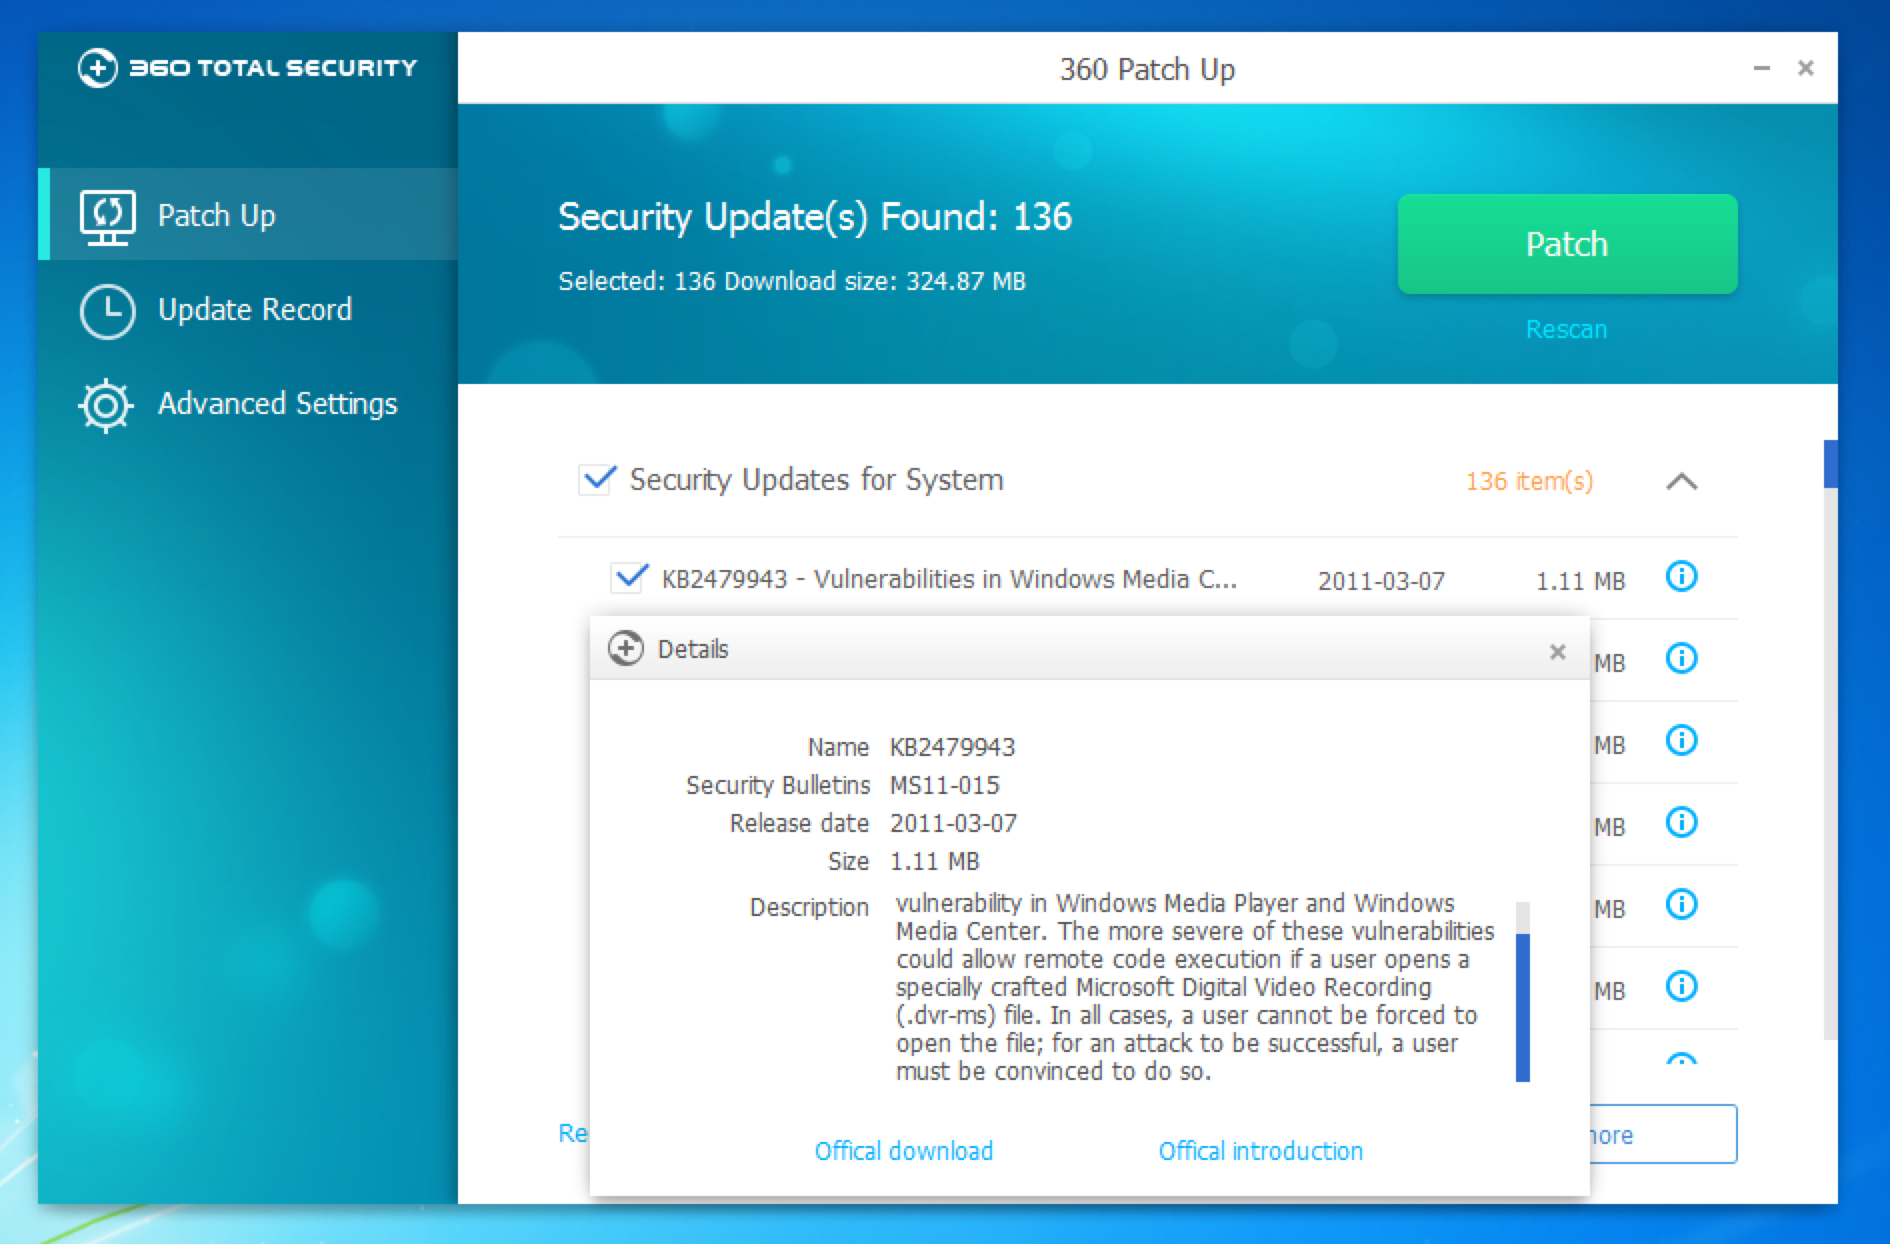 360 Total Security Crack v10.8.0.1498 + Patch Terbaru Gratis 